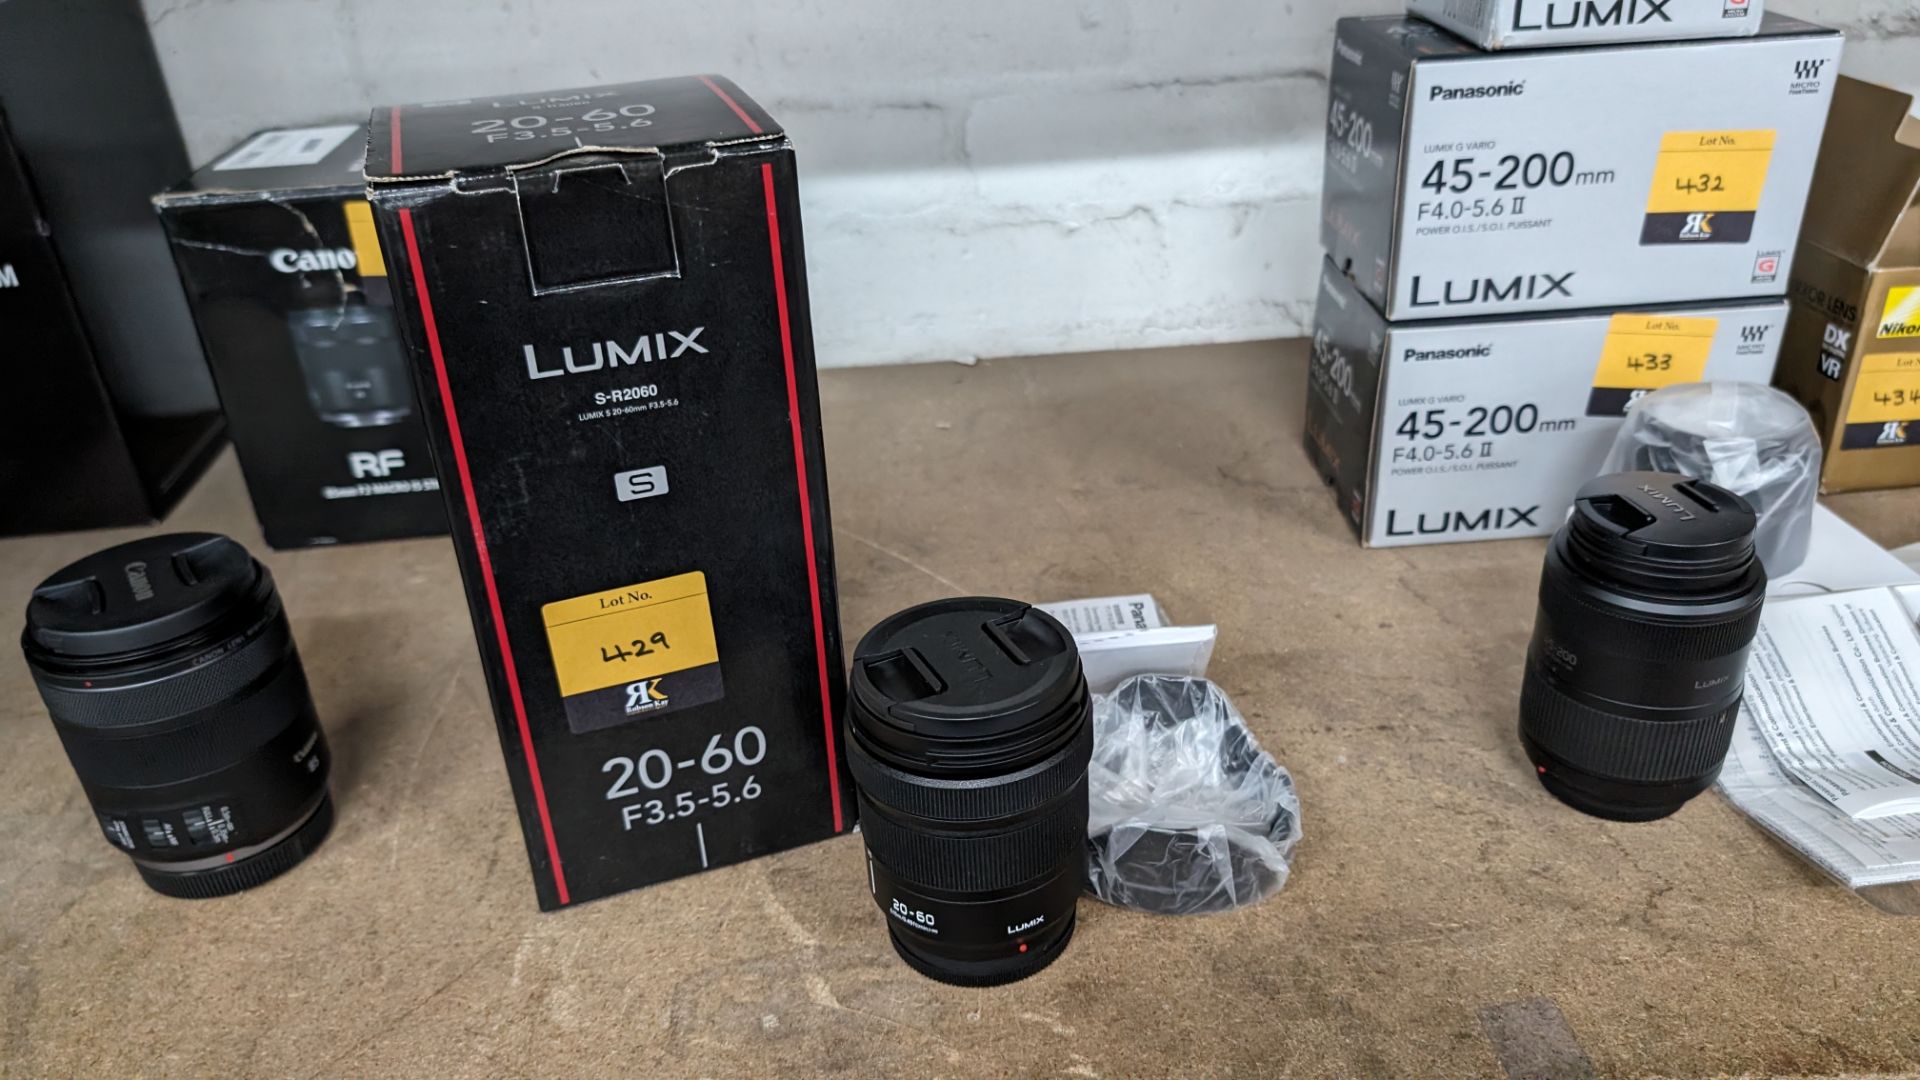 Panasonic Lumix model S-R2060 lens, 20-60mm, f3.5-5.6 - Image 4 of 14